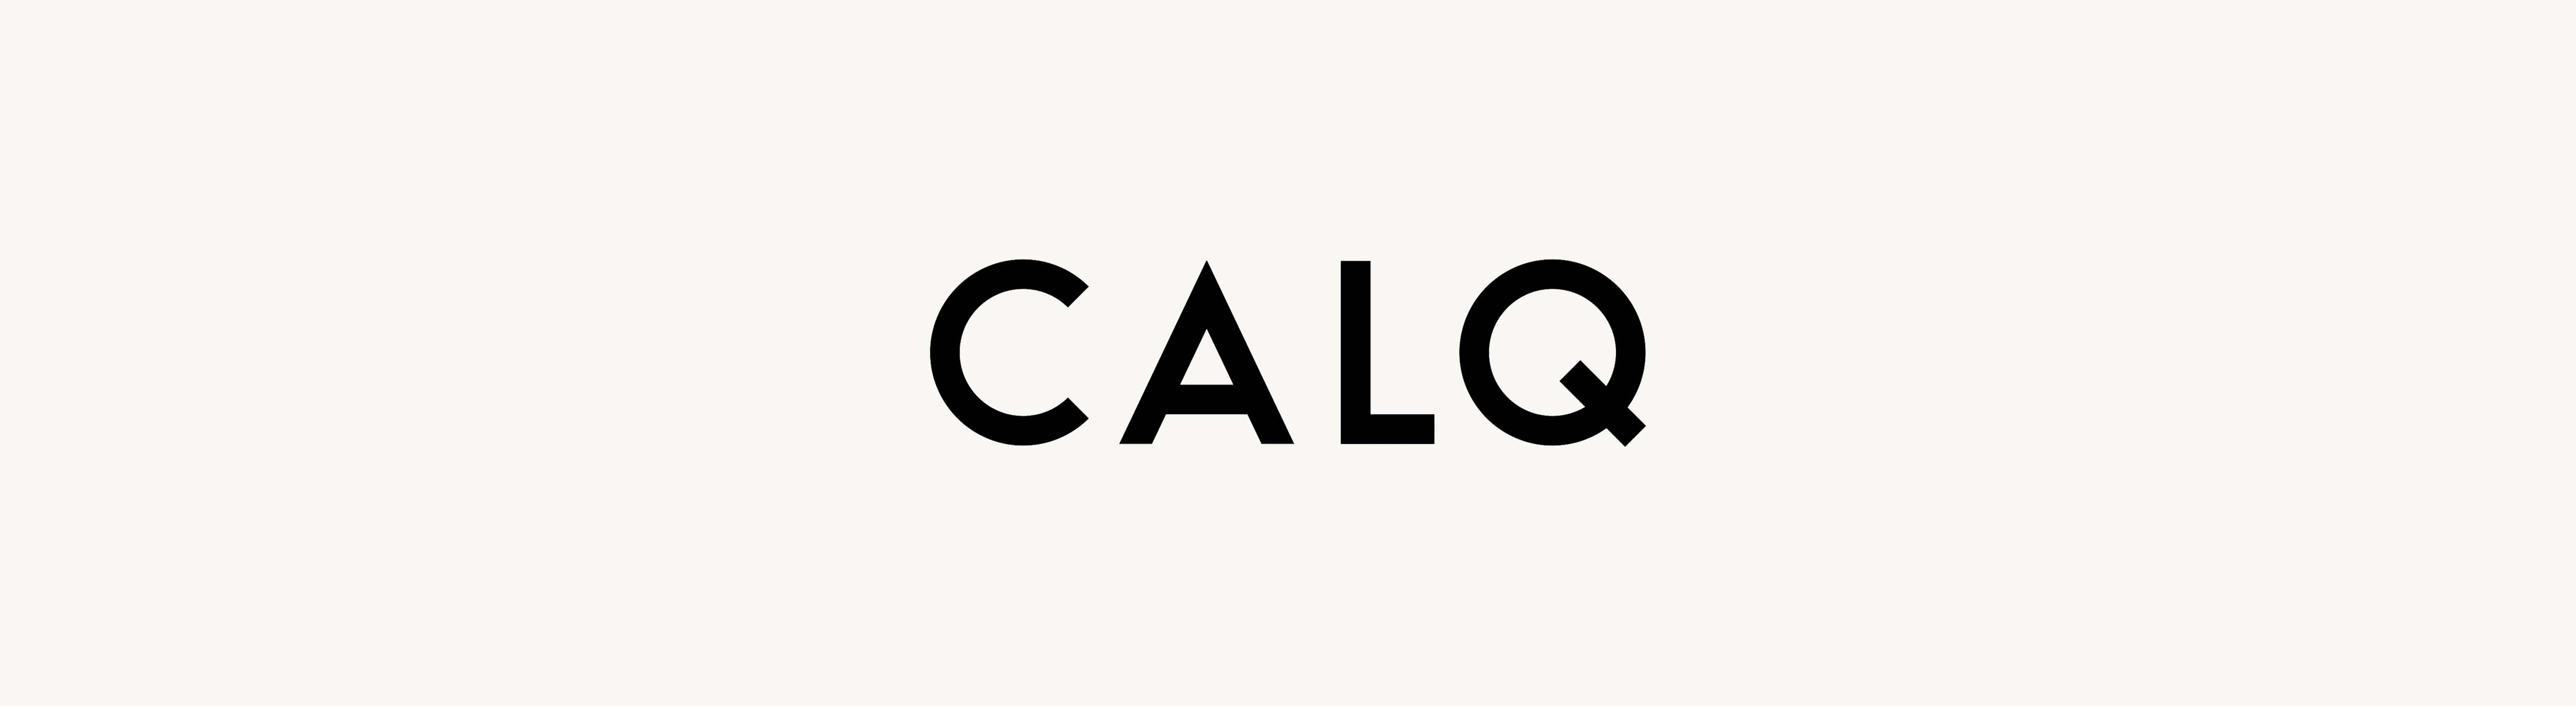 logo-focussurunmecene-calq2